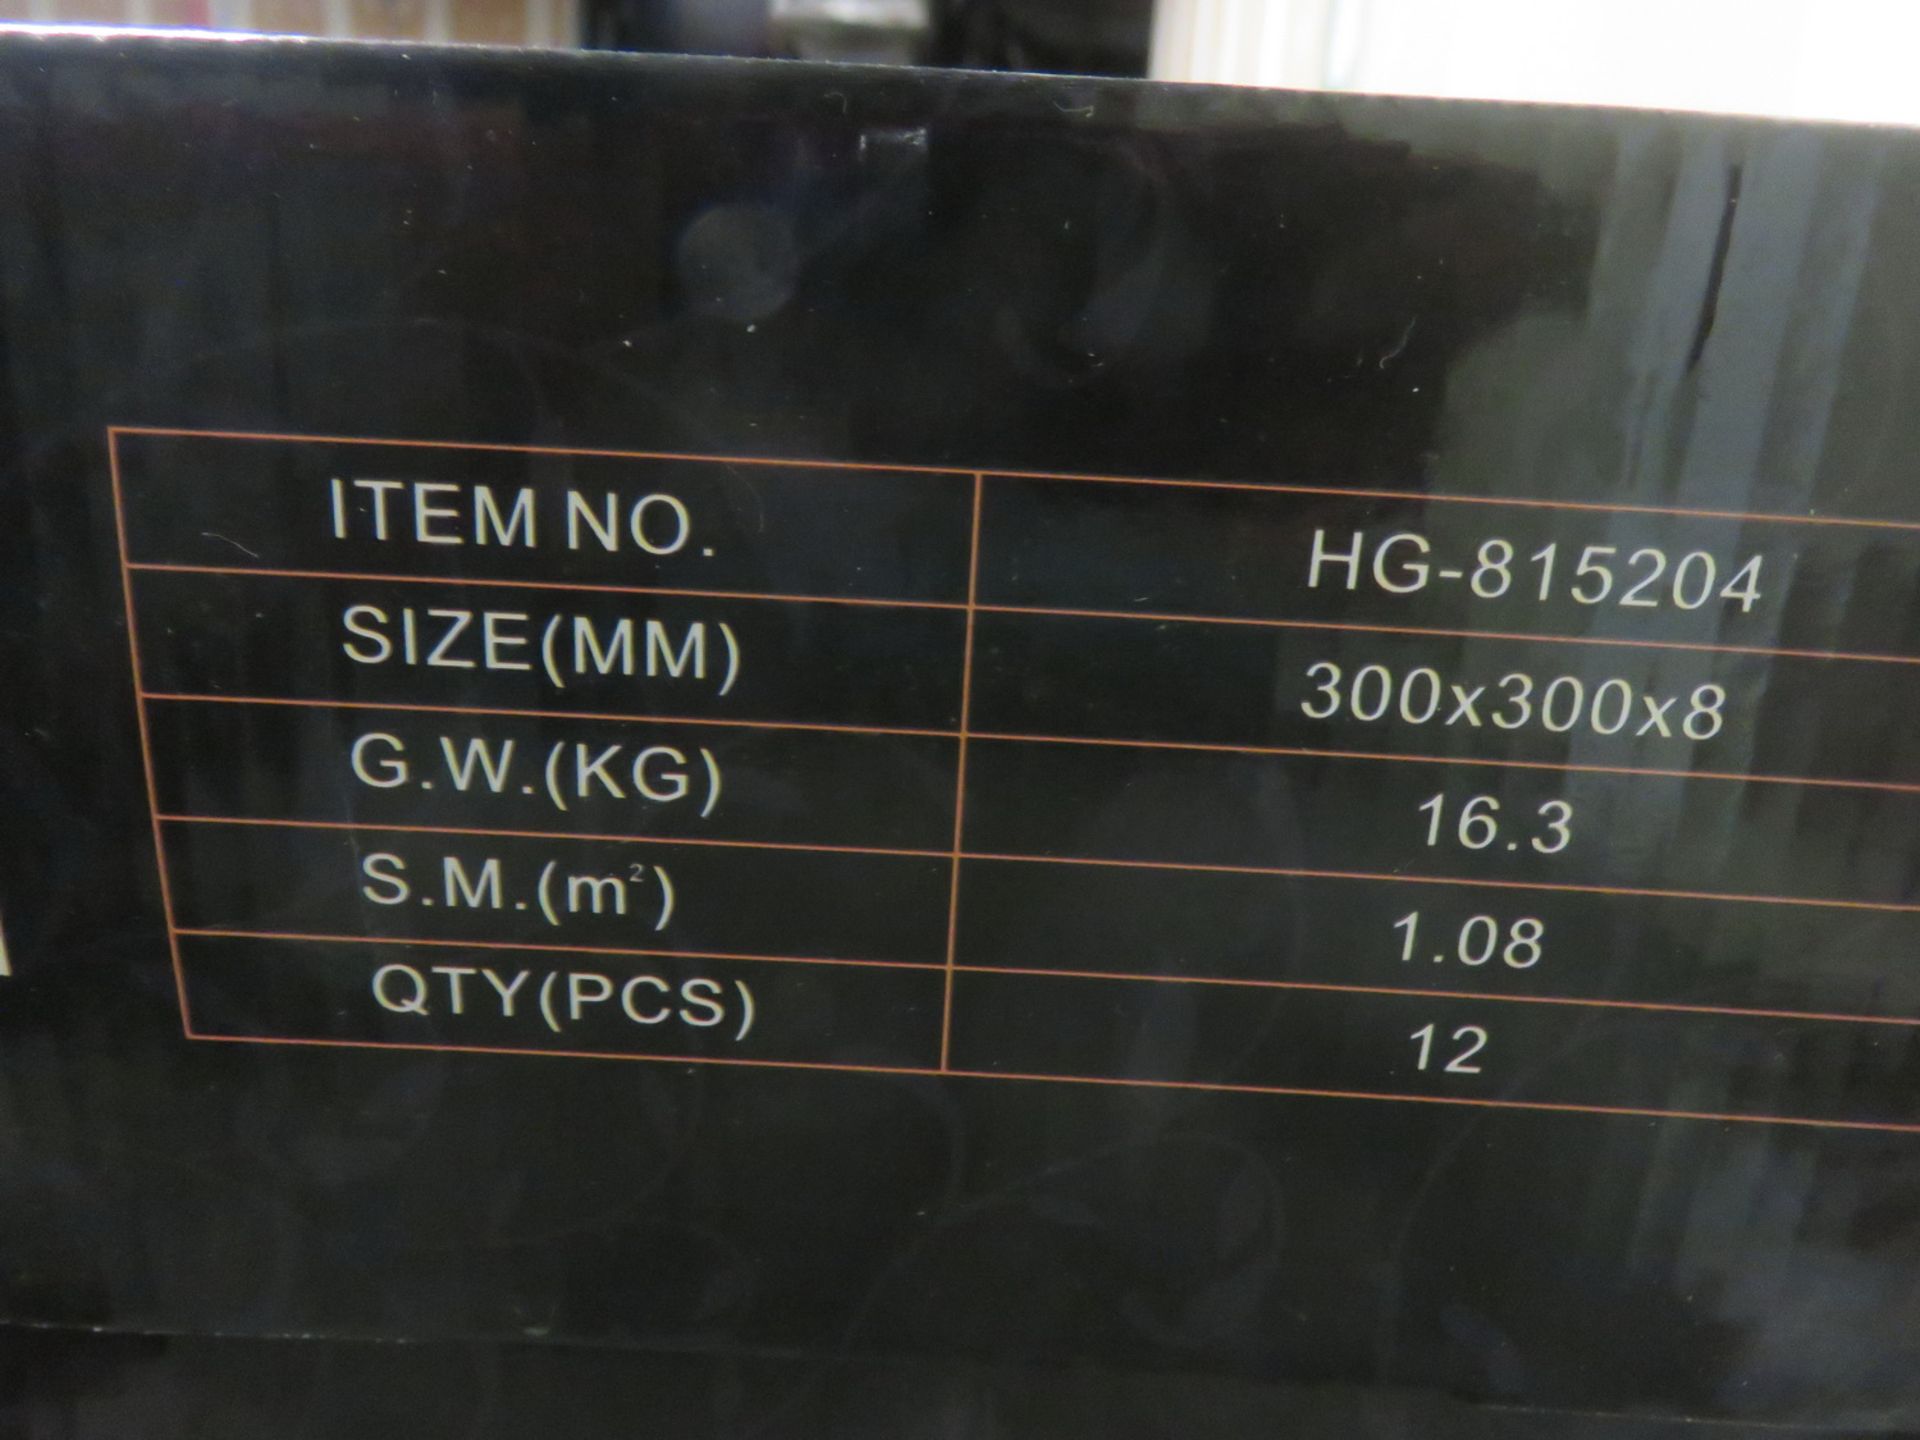 BOXES - CROWN HG-815204 300 X 300 X 8MM MOSAIC TILES (12 PCS/BOX) - Image 2 of 3